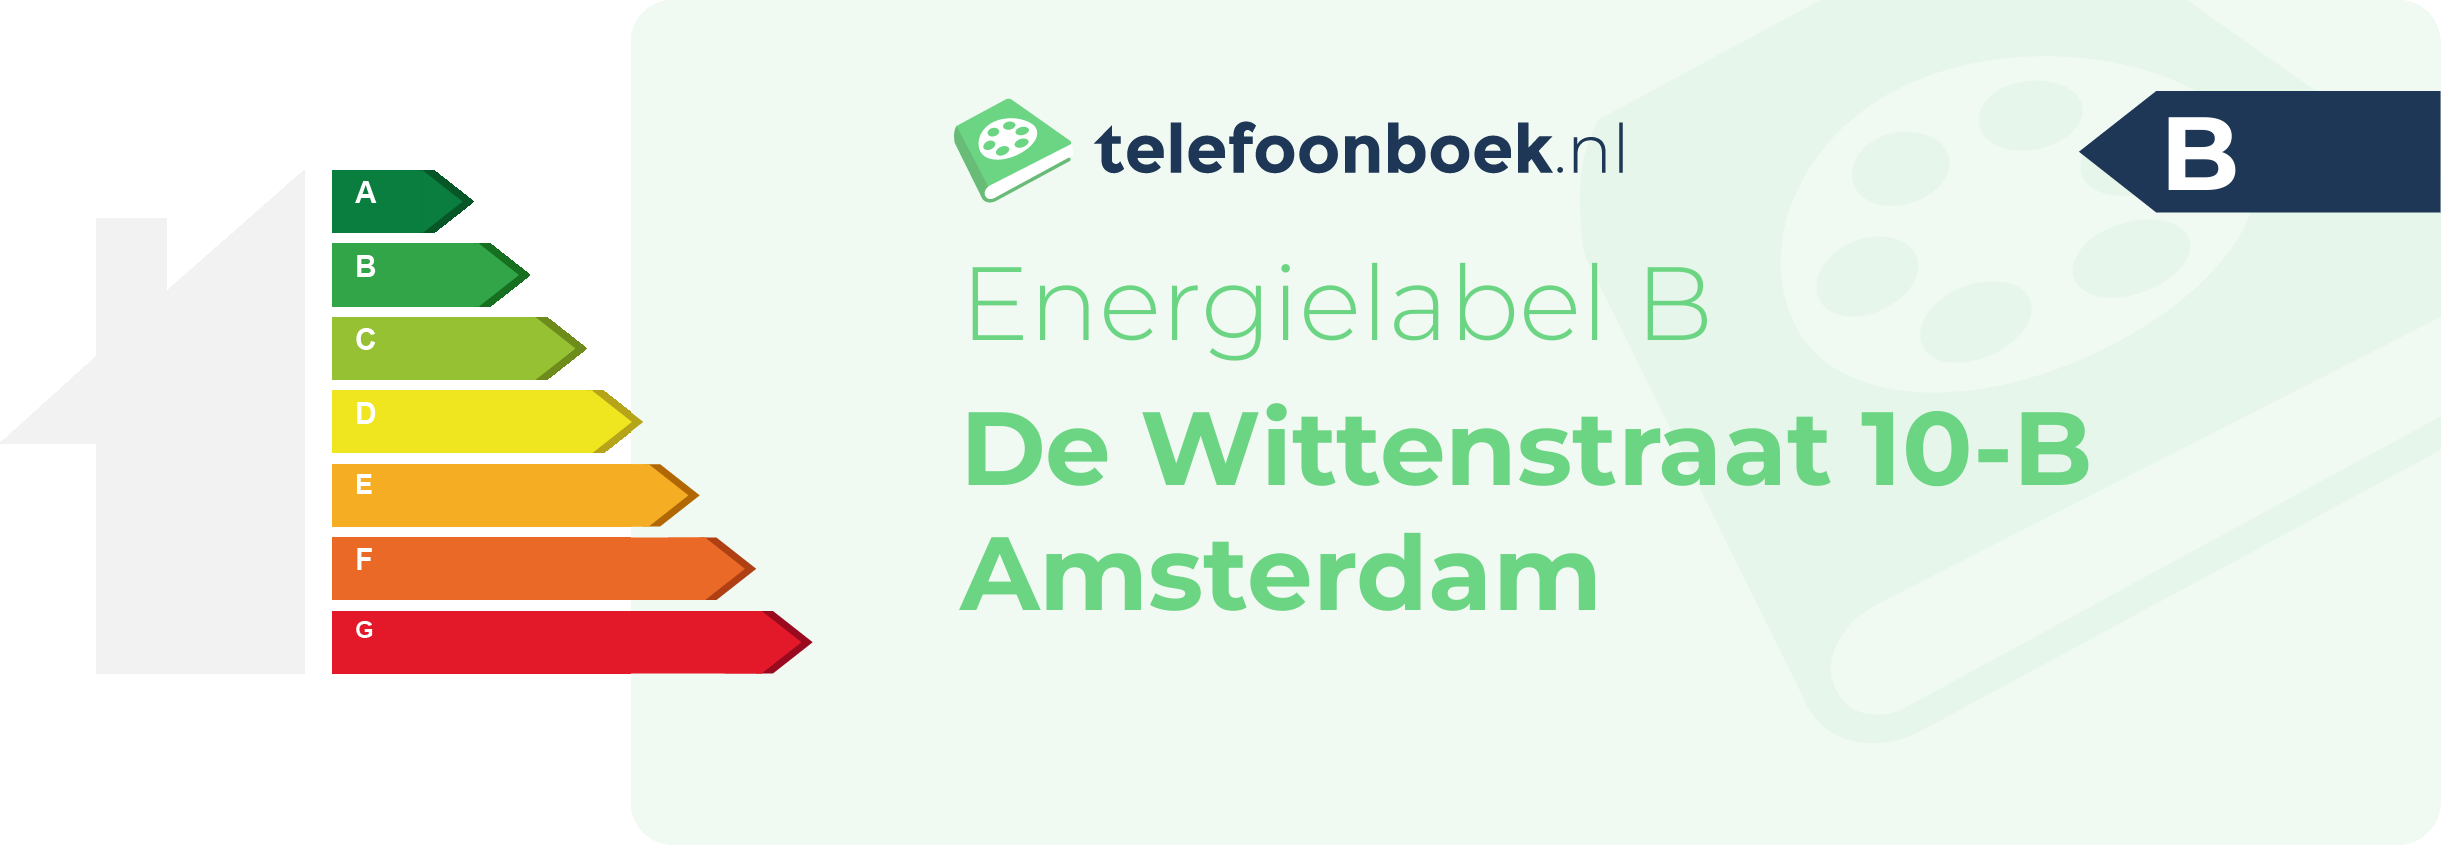 Energielabel De Wittenstraat 10-B Amsterdam